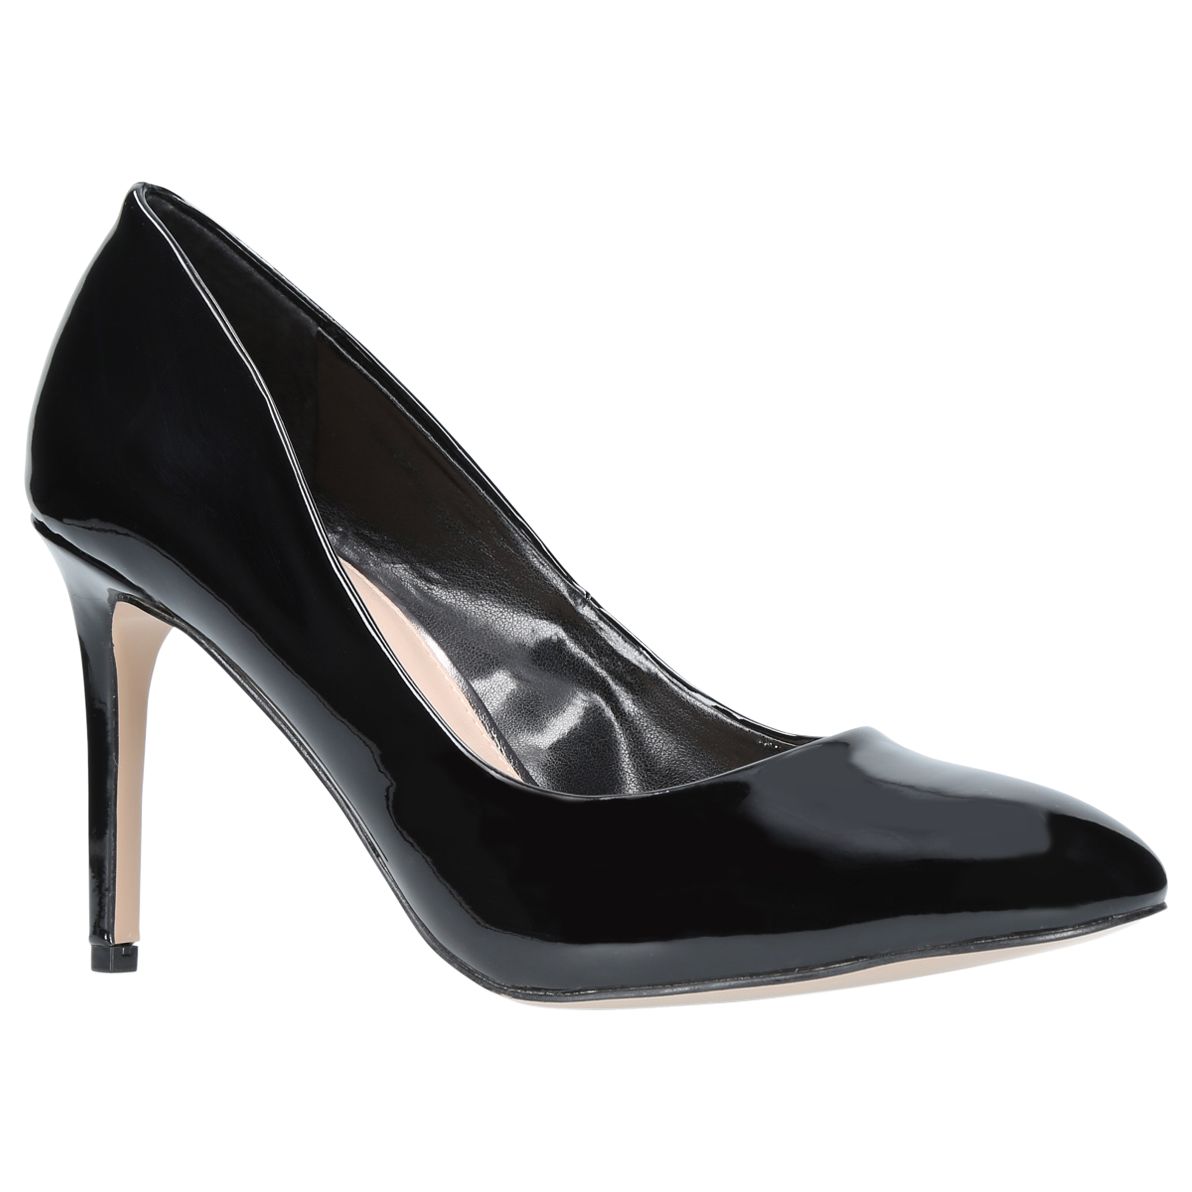 Carvela Aimee Stiletto Heeled Court Shoes, Black Patent